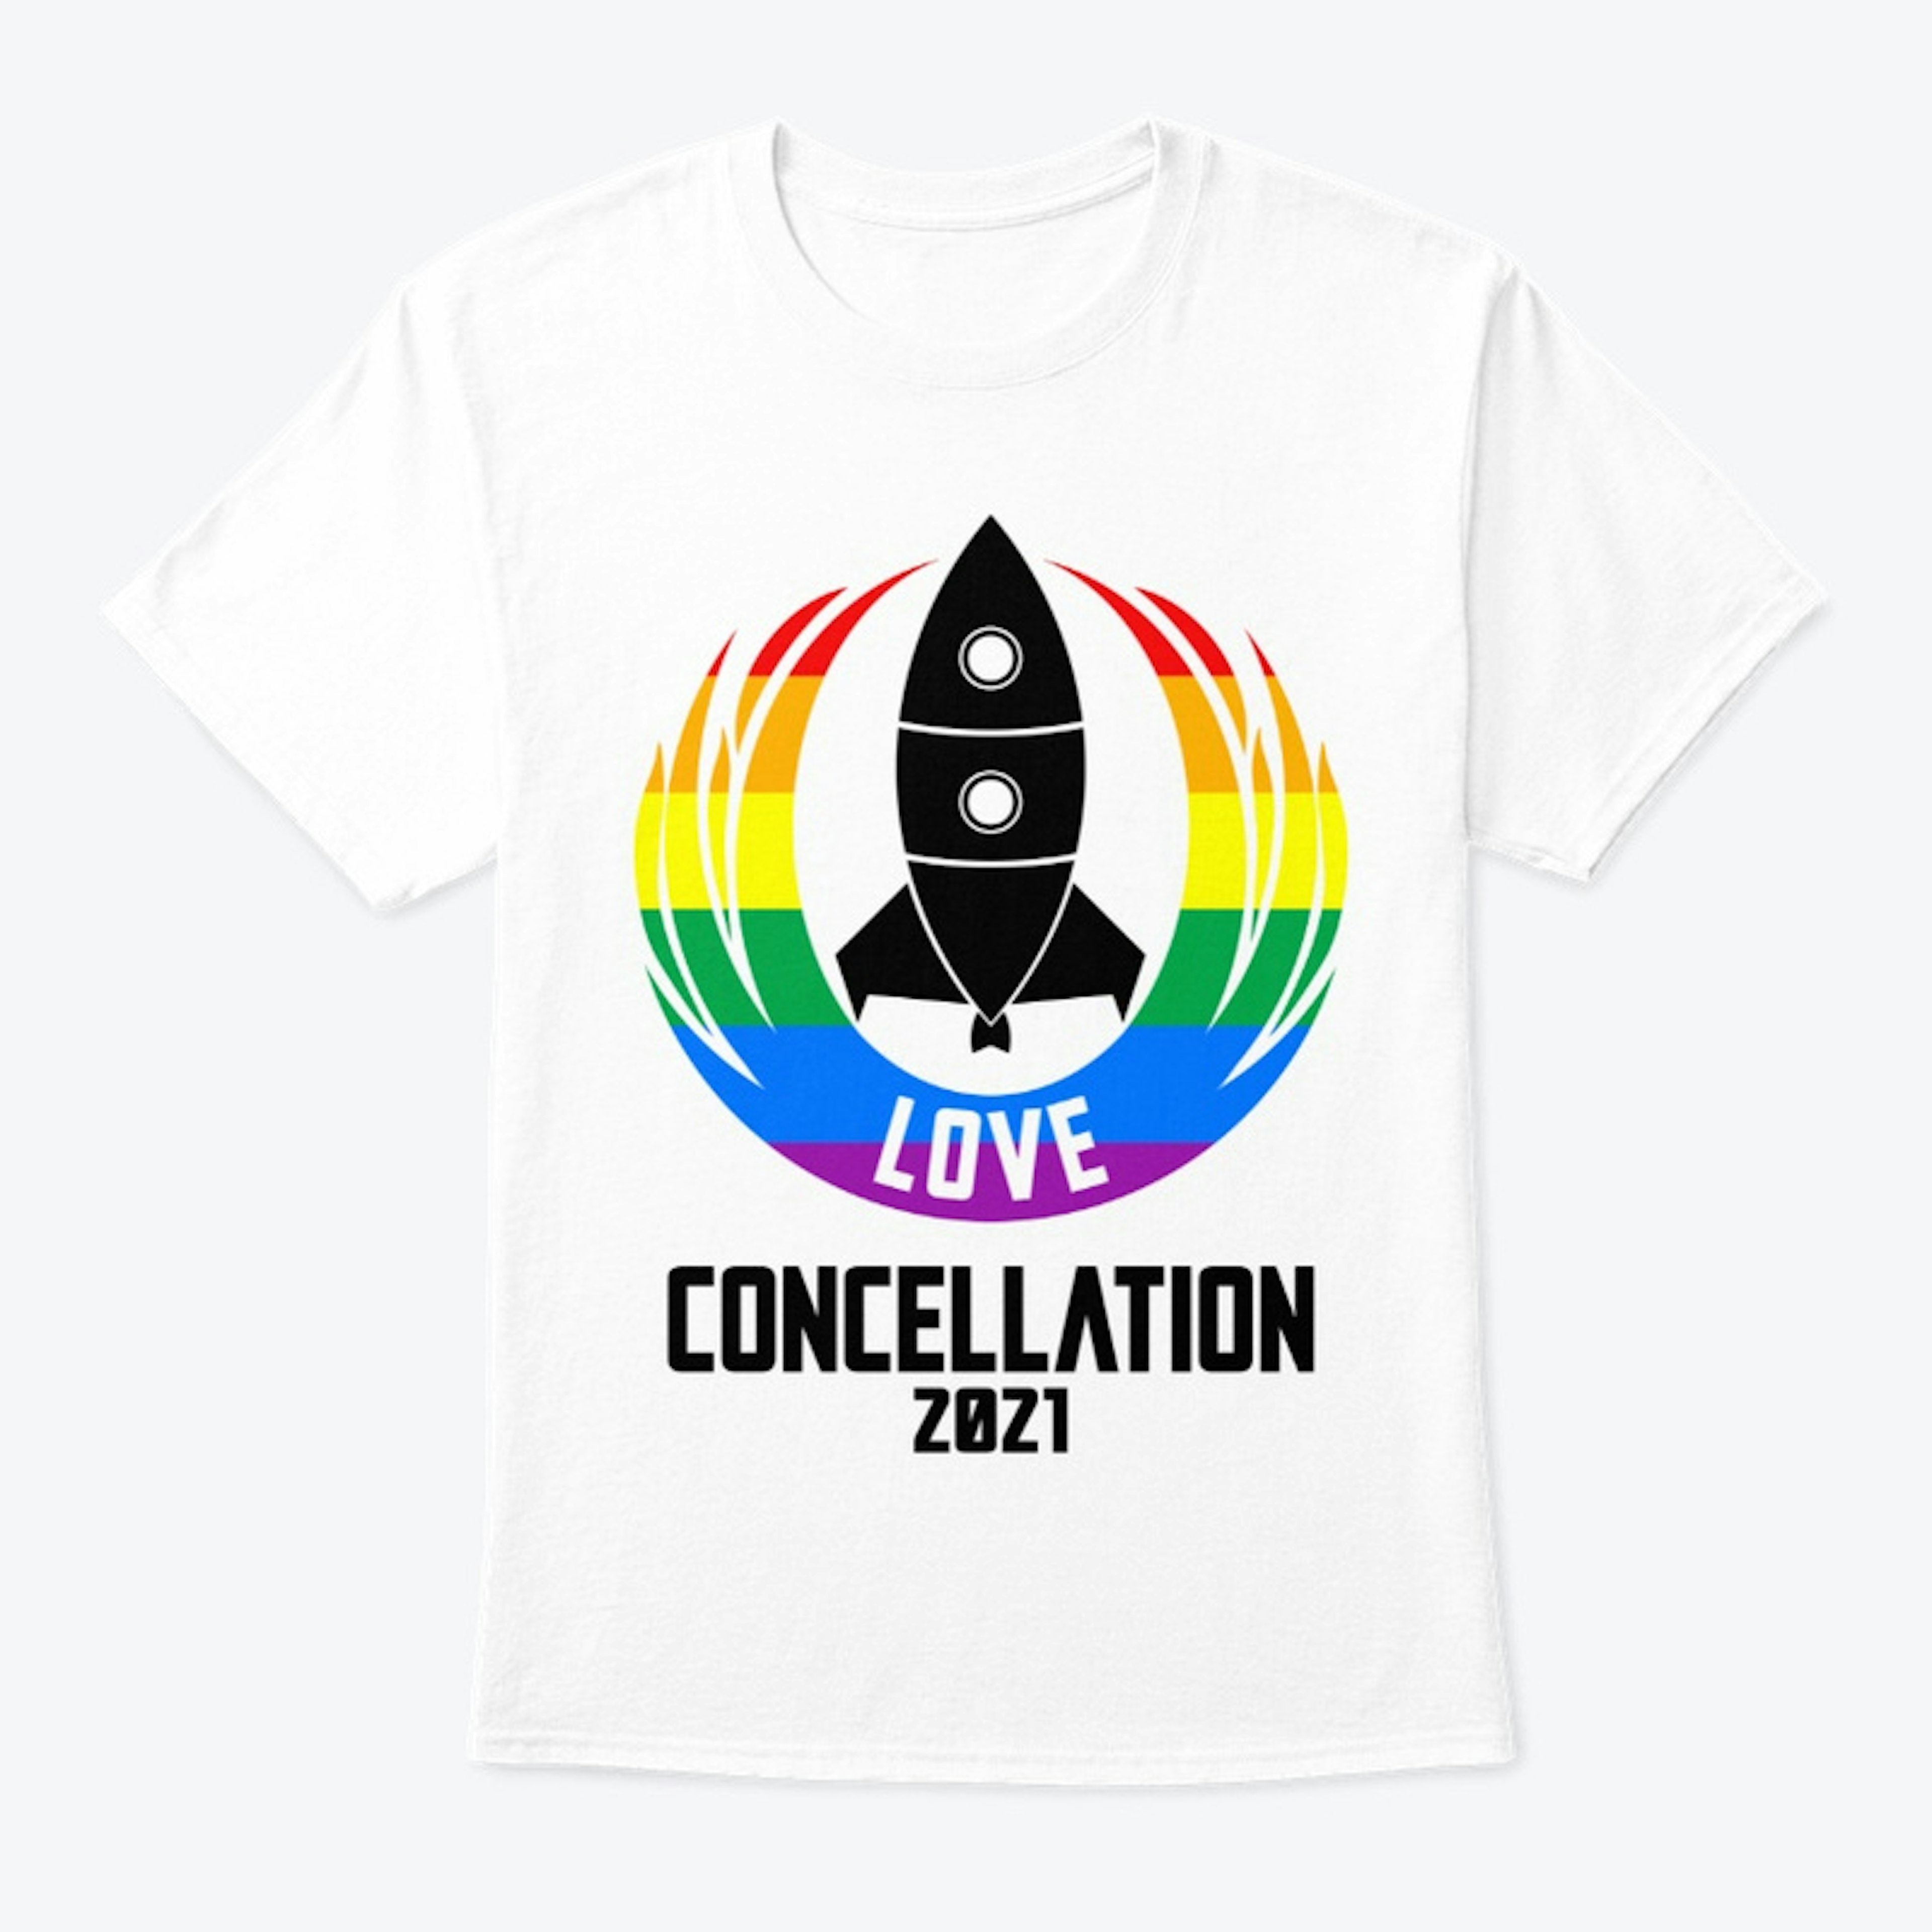 Concellation 2021 Love!